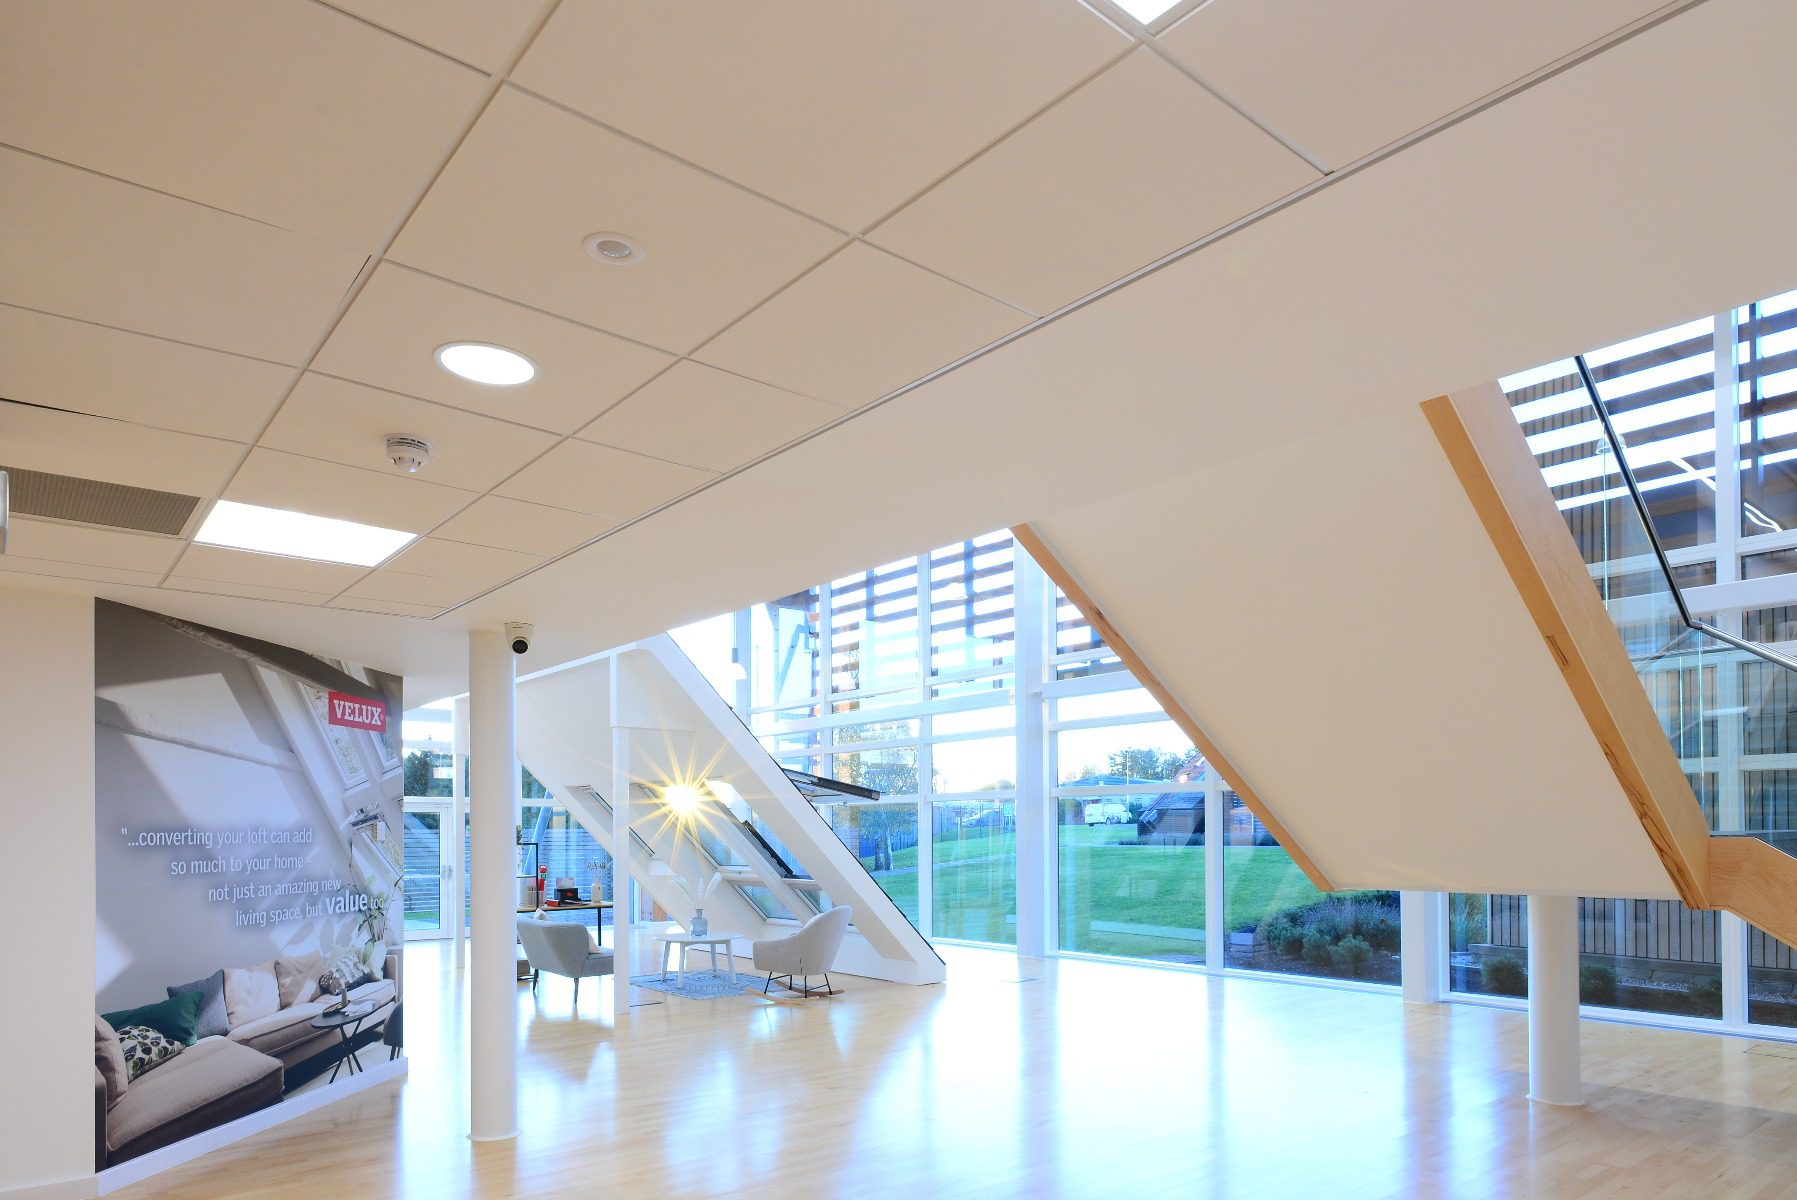 Zentia Ceiling Tiles on Velux UK and Ireland's HQ